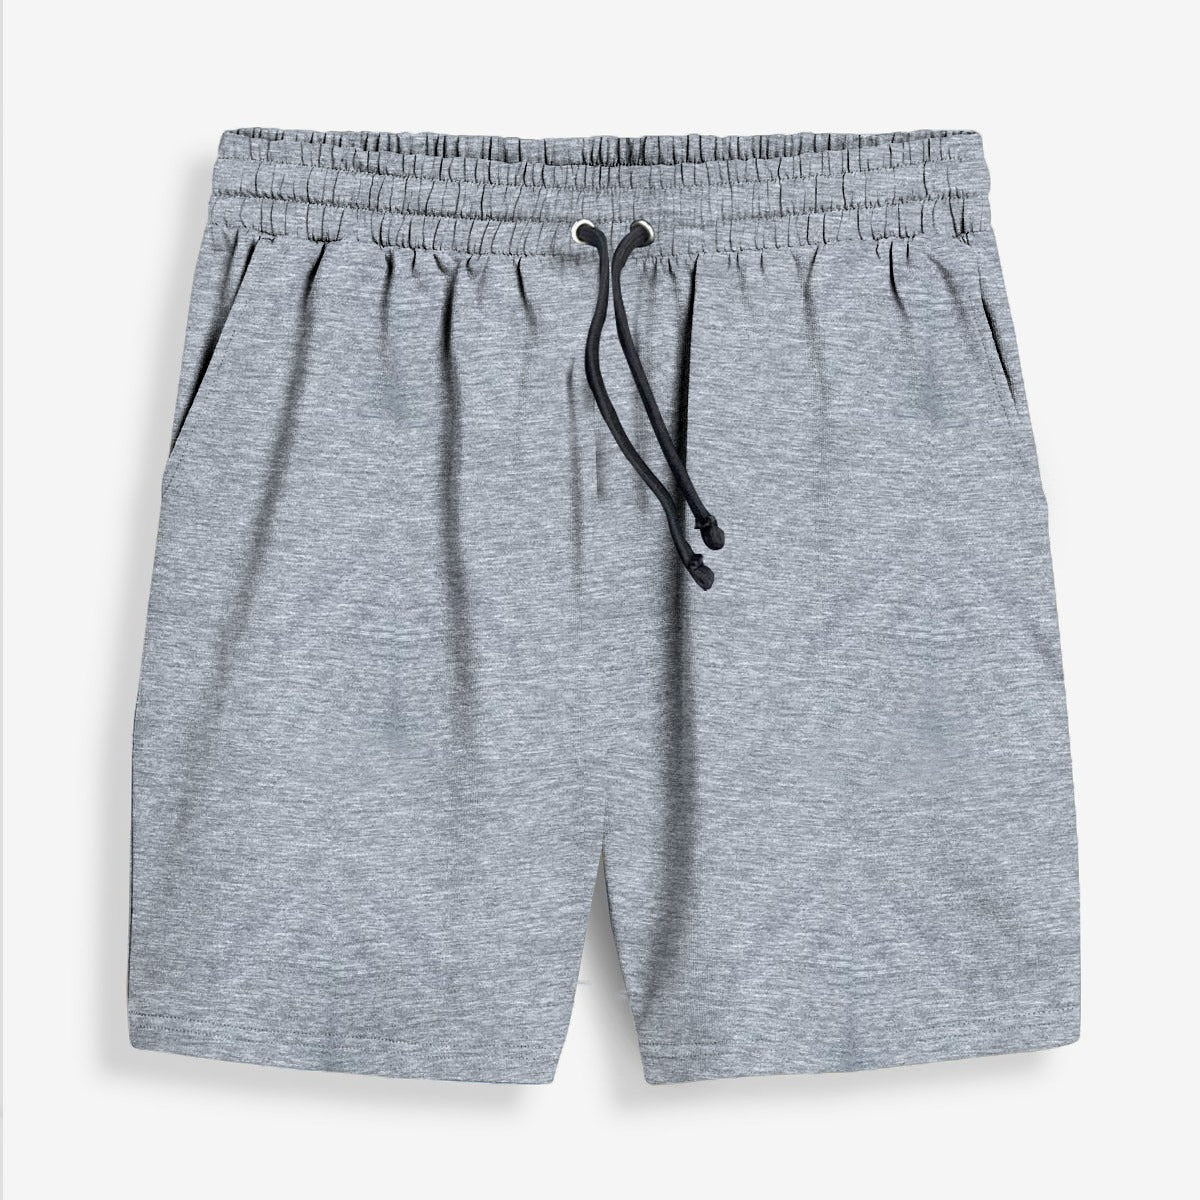 Printed Two Quarter Summer Shorts - Hangree